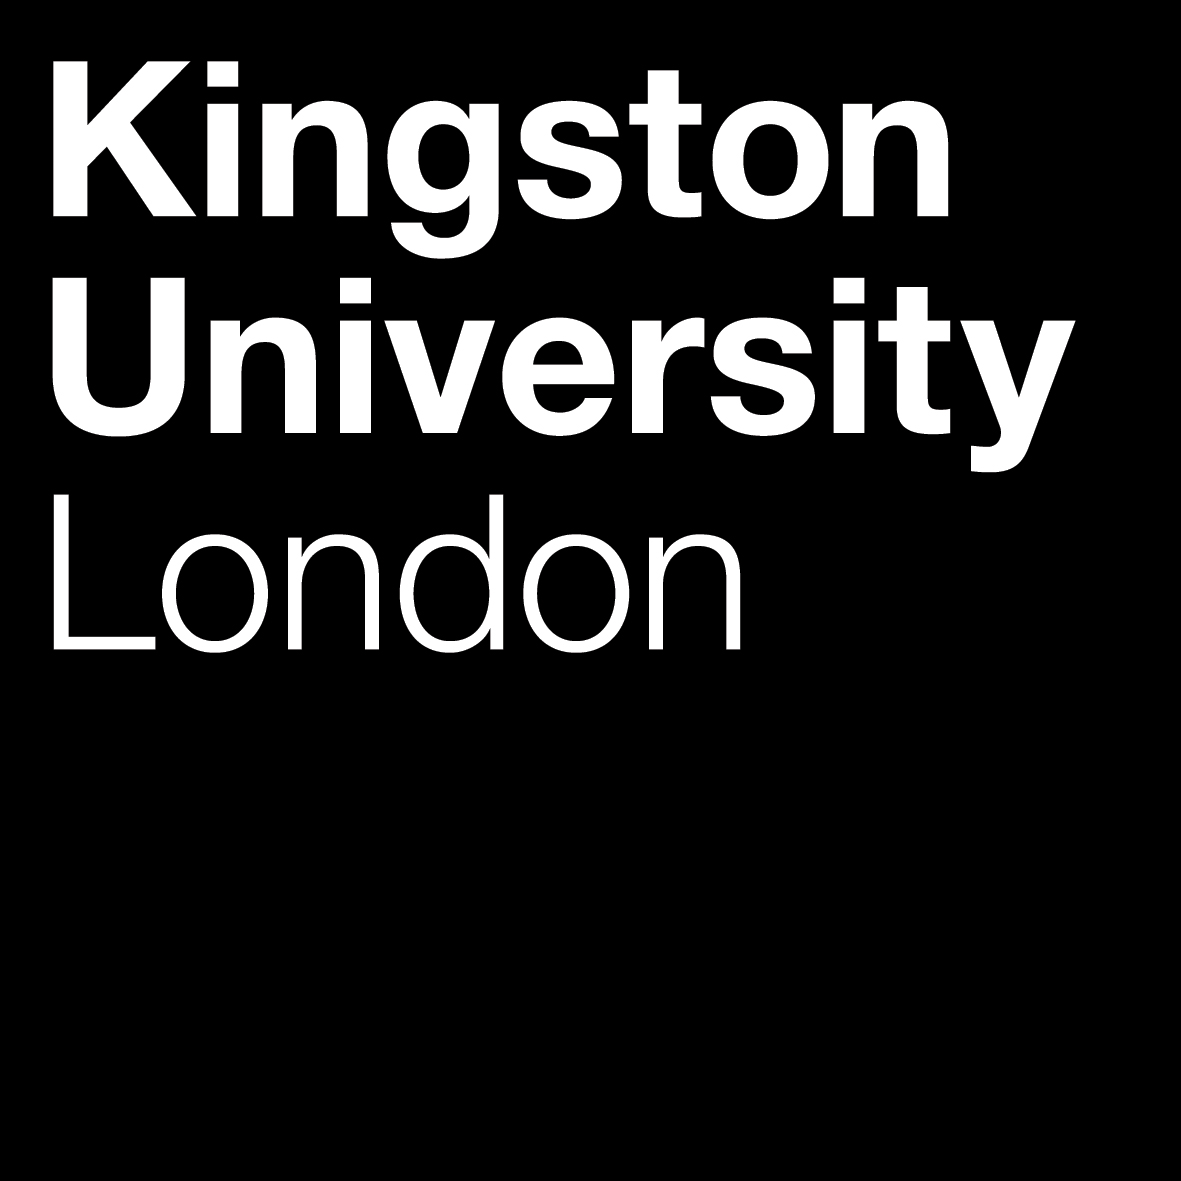 Study in London at Kingston University